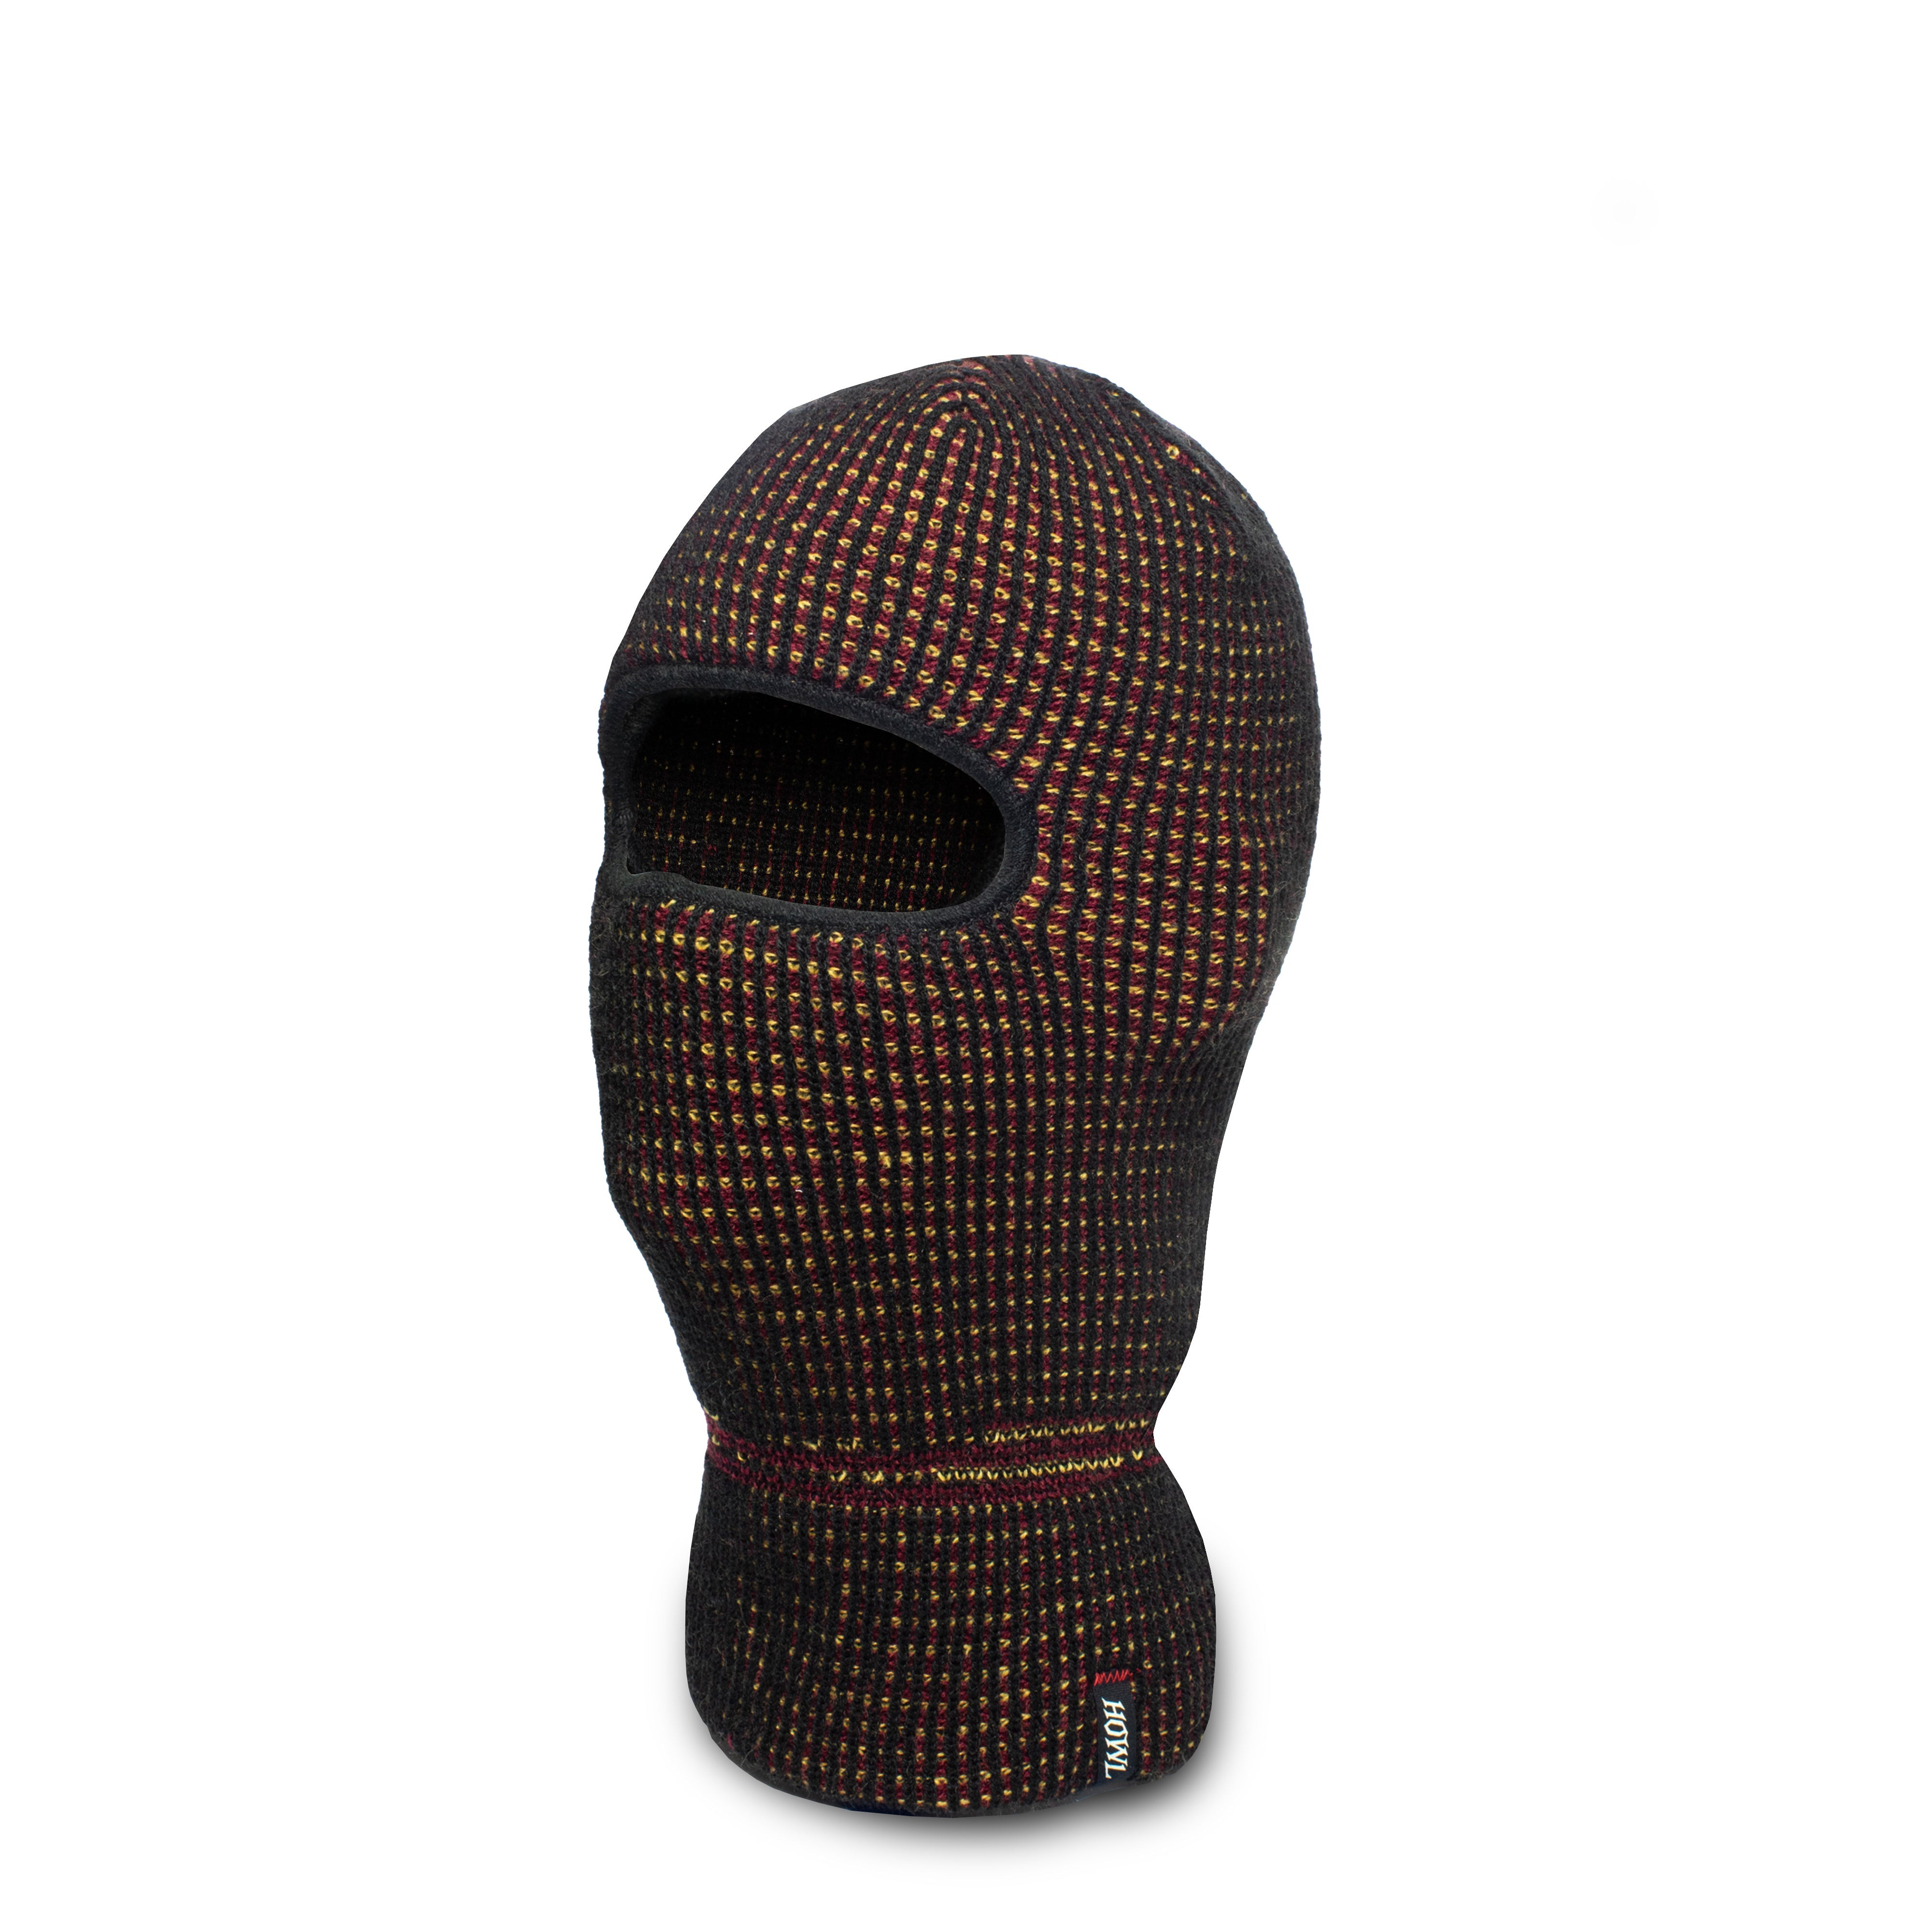 Brick Howl Supply Burglar Facemask